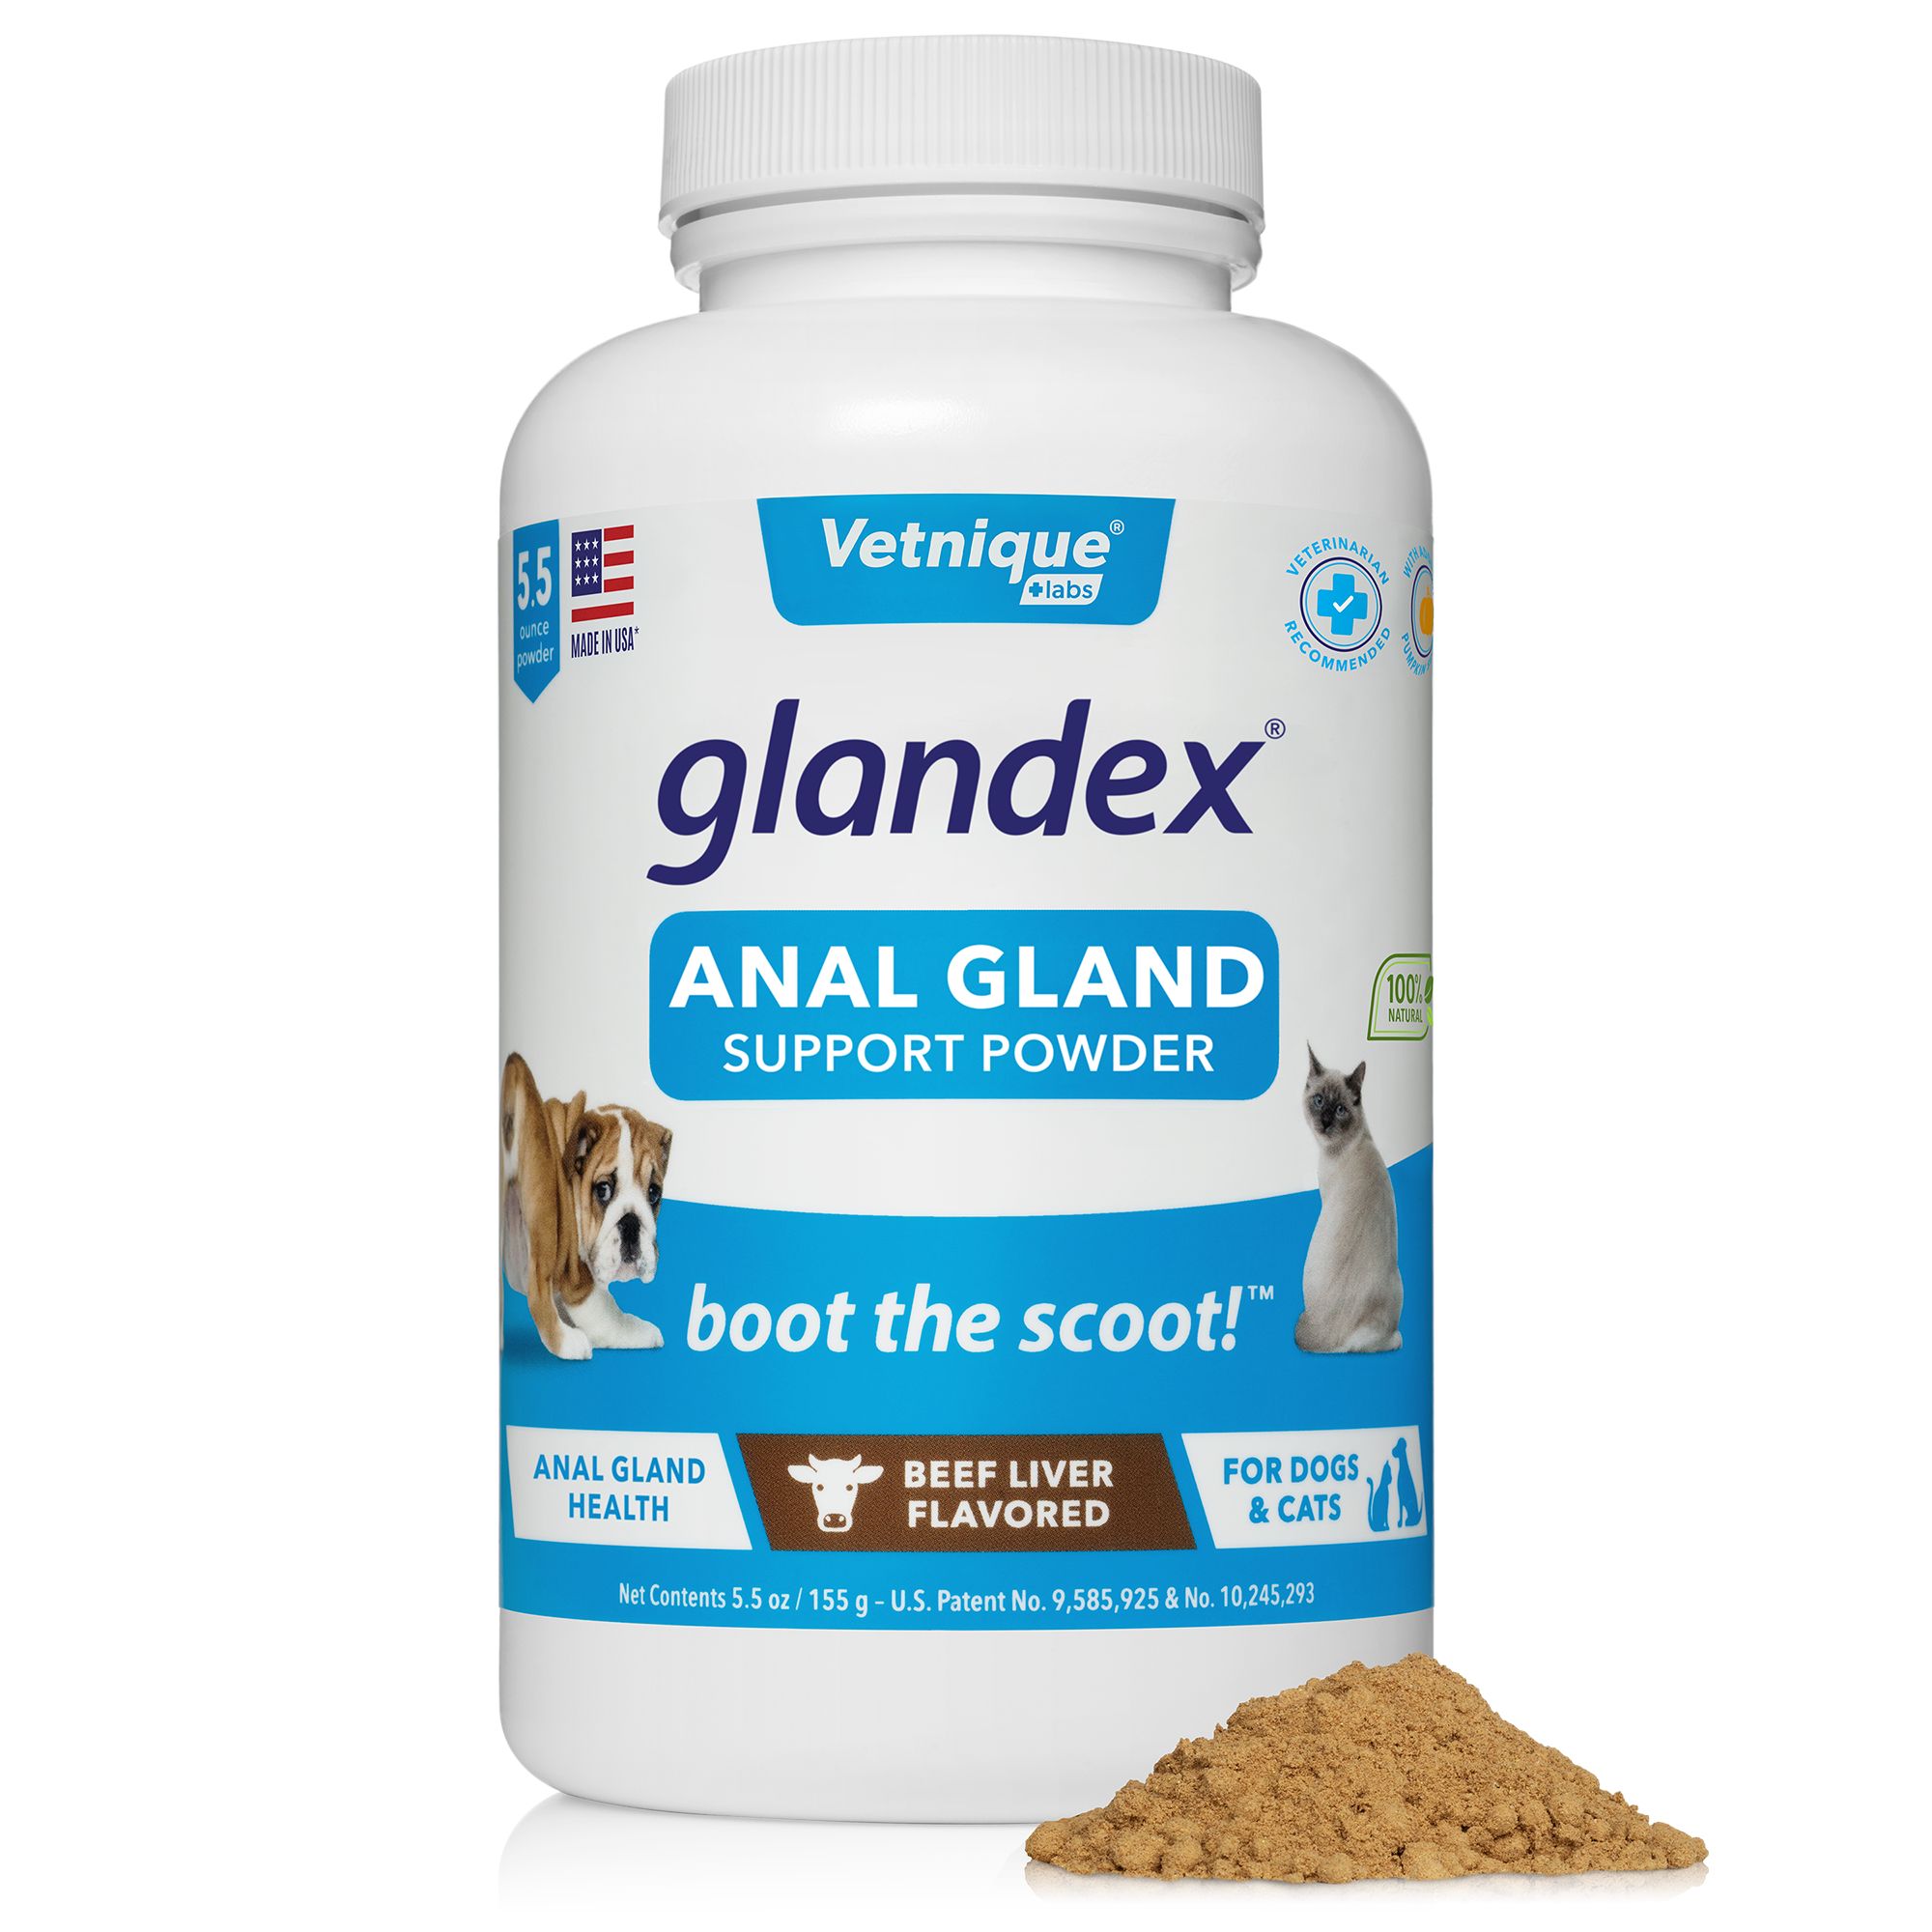 glandex powder reviews